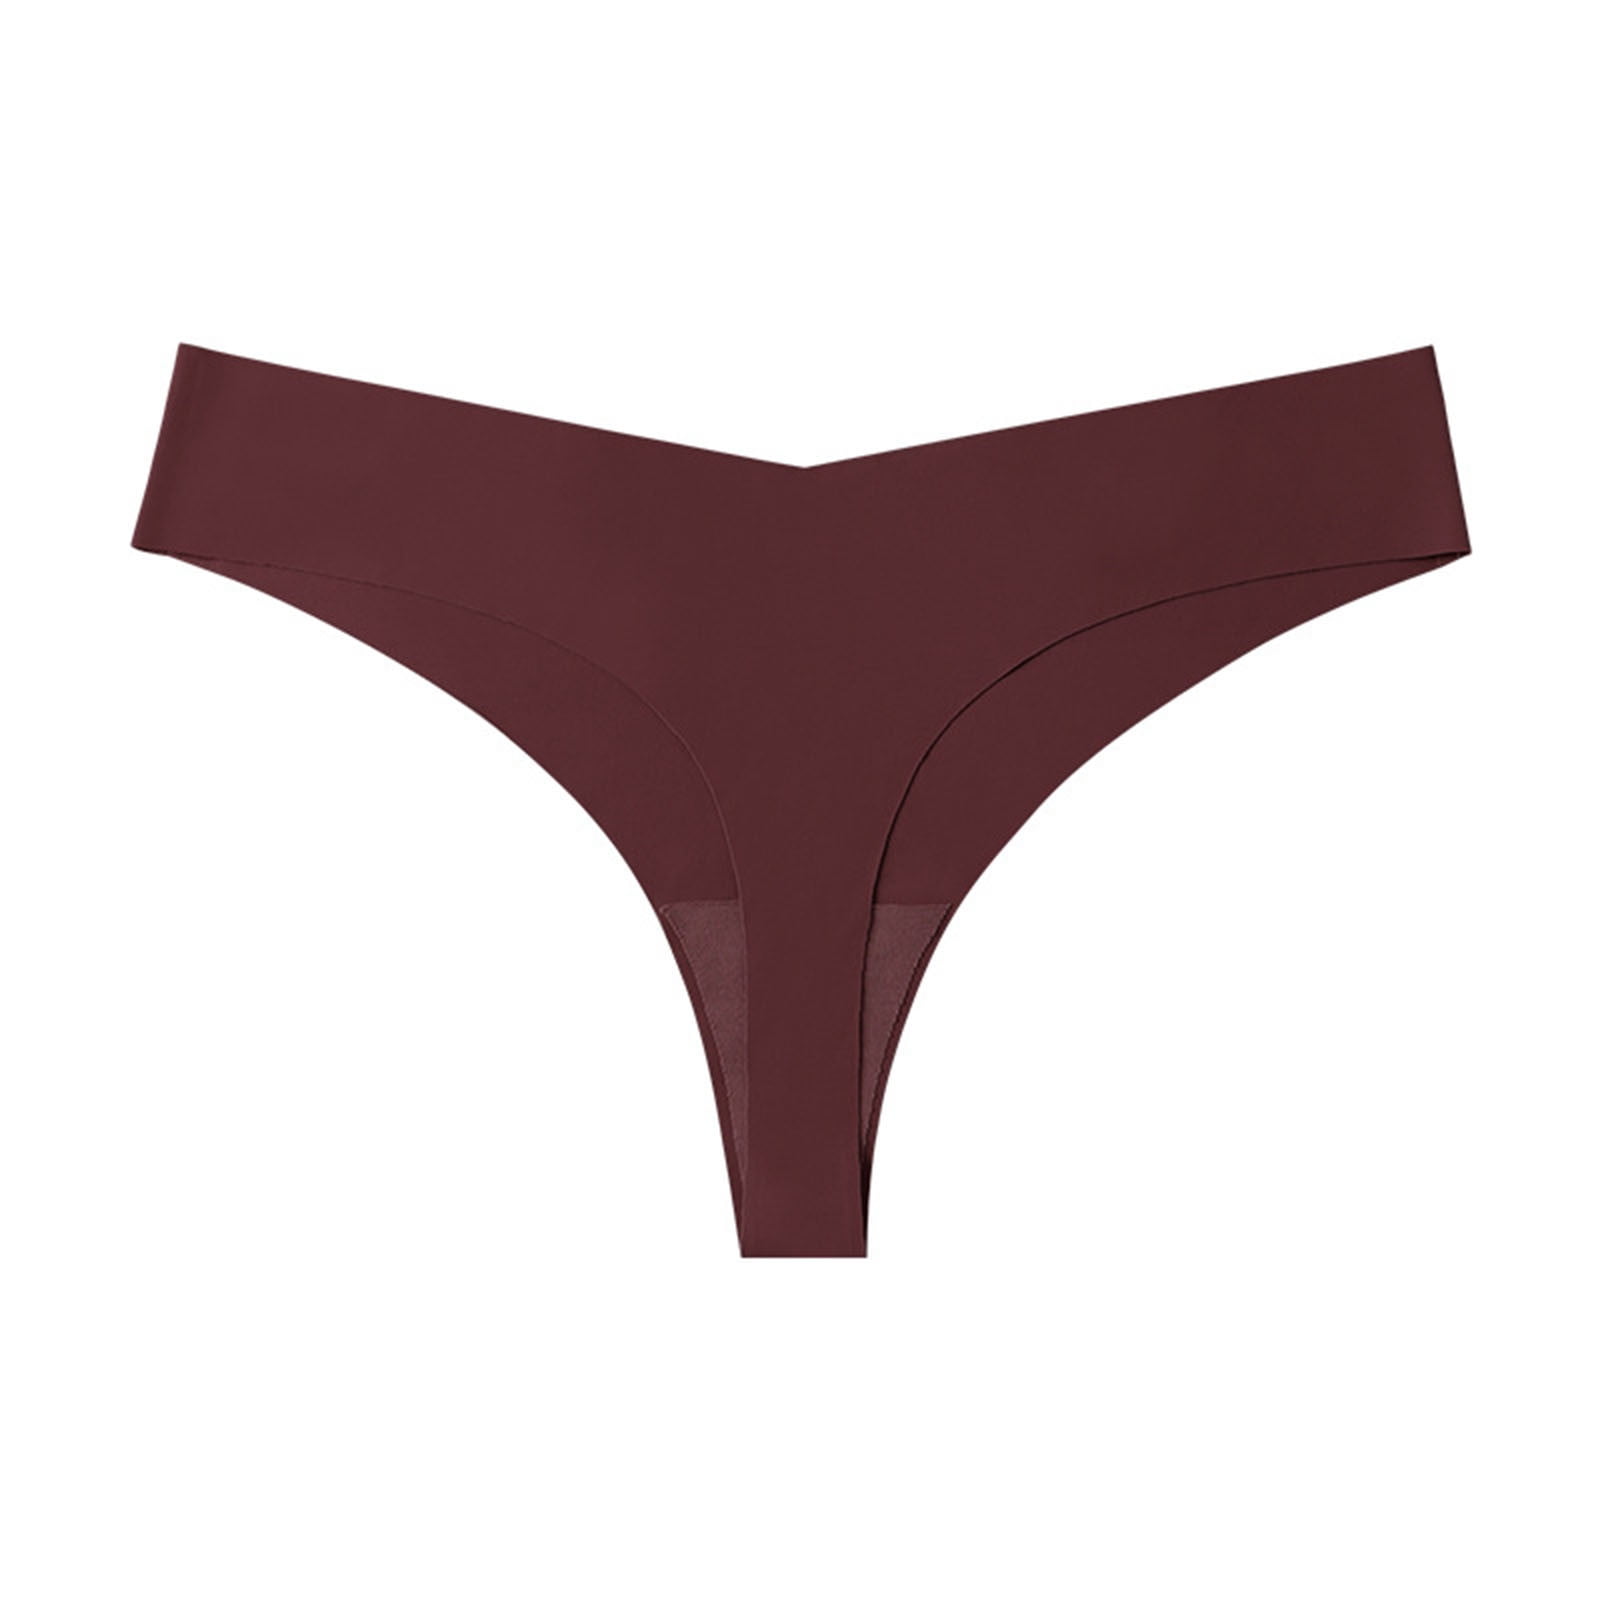 DAETIROS Womens Underwear Seamless Cotton Elastic Hanes Microfiber with  Pockets Leak Proof Menstrual Soft Breathable Fashion Gray Best Choice Size  4XL 